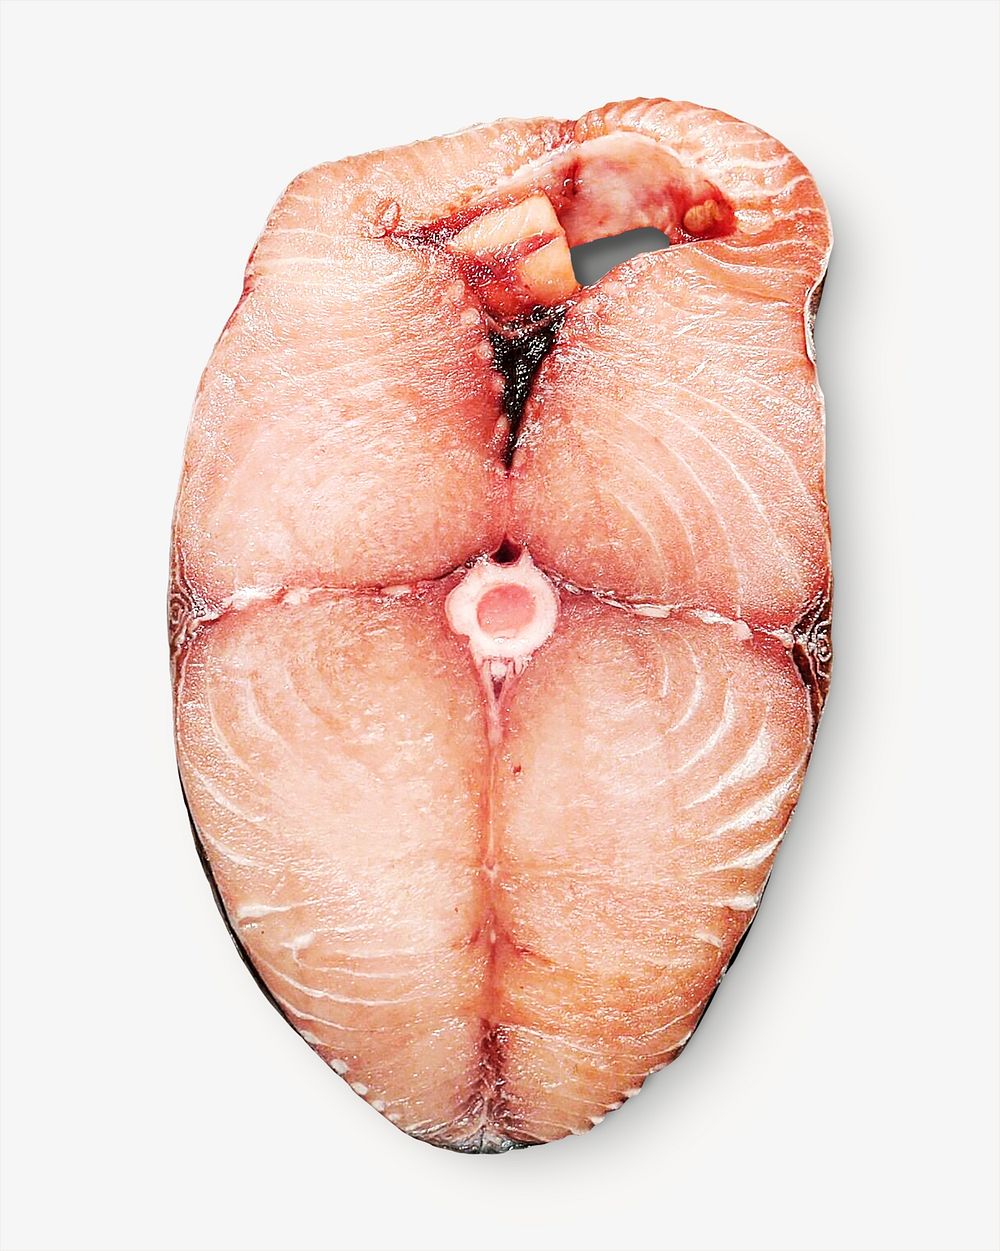 Fish steak, isolated image